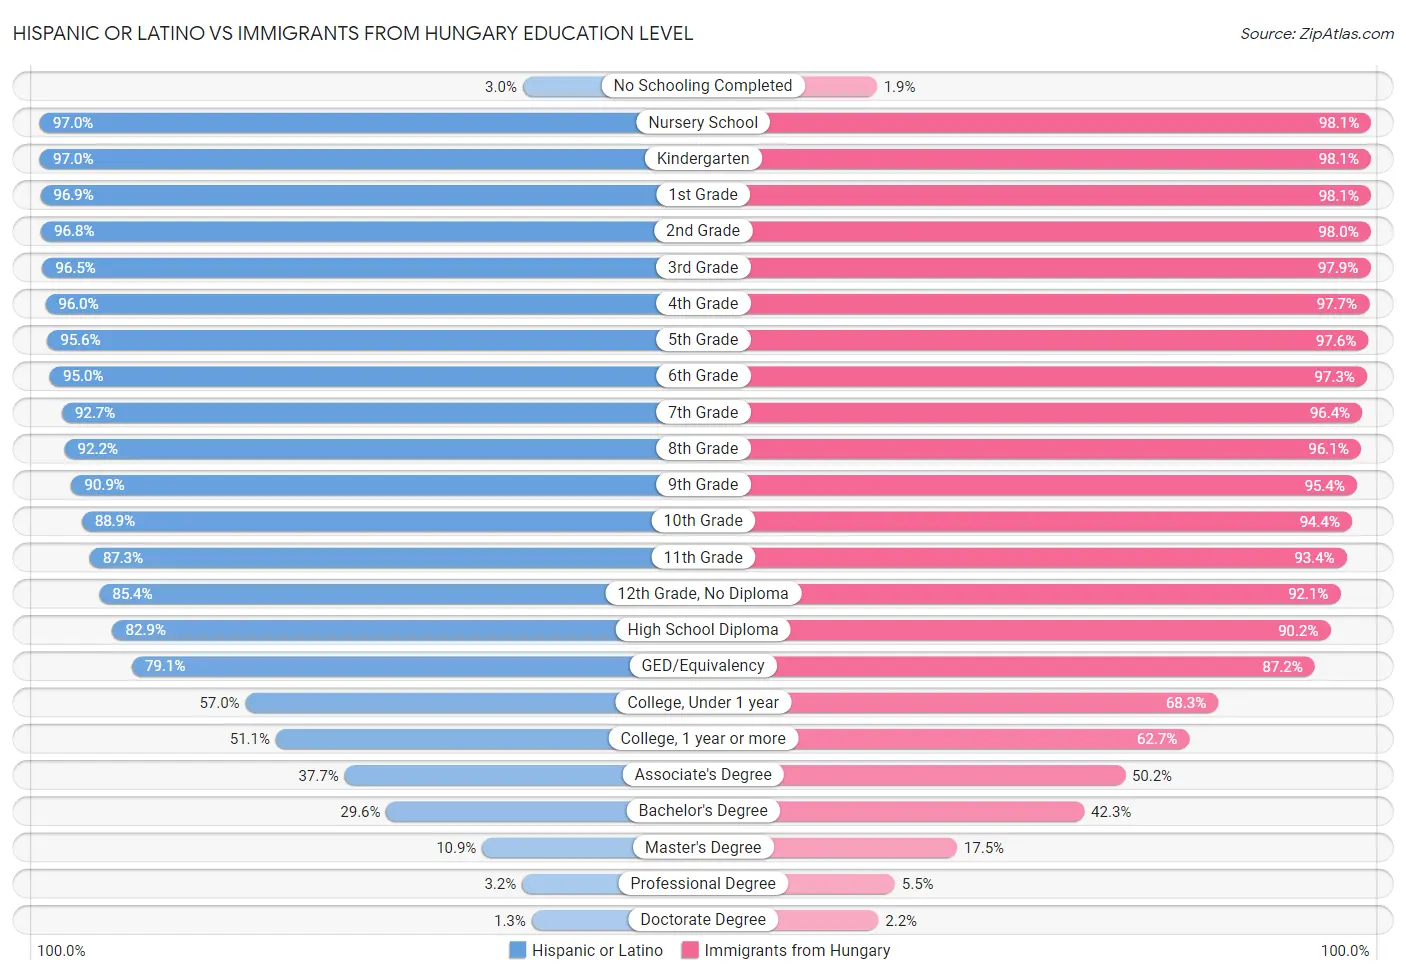 Hispanic or Latino vs Immigrants from Hungary Education Level